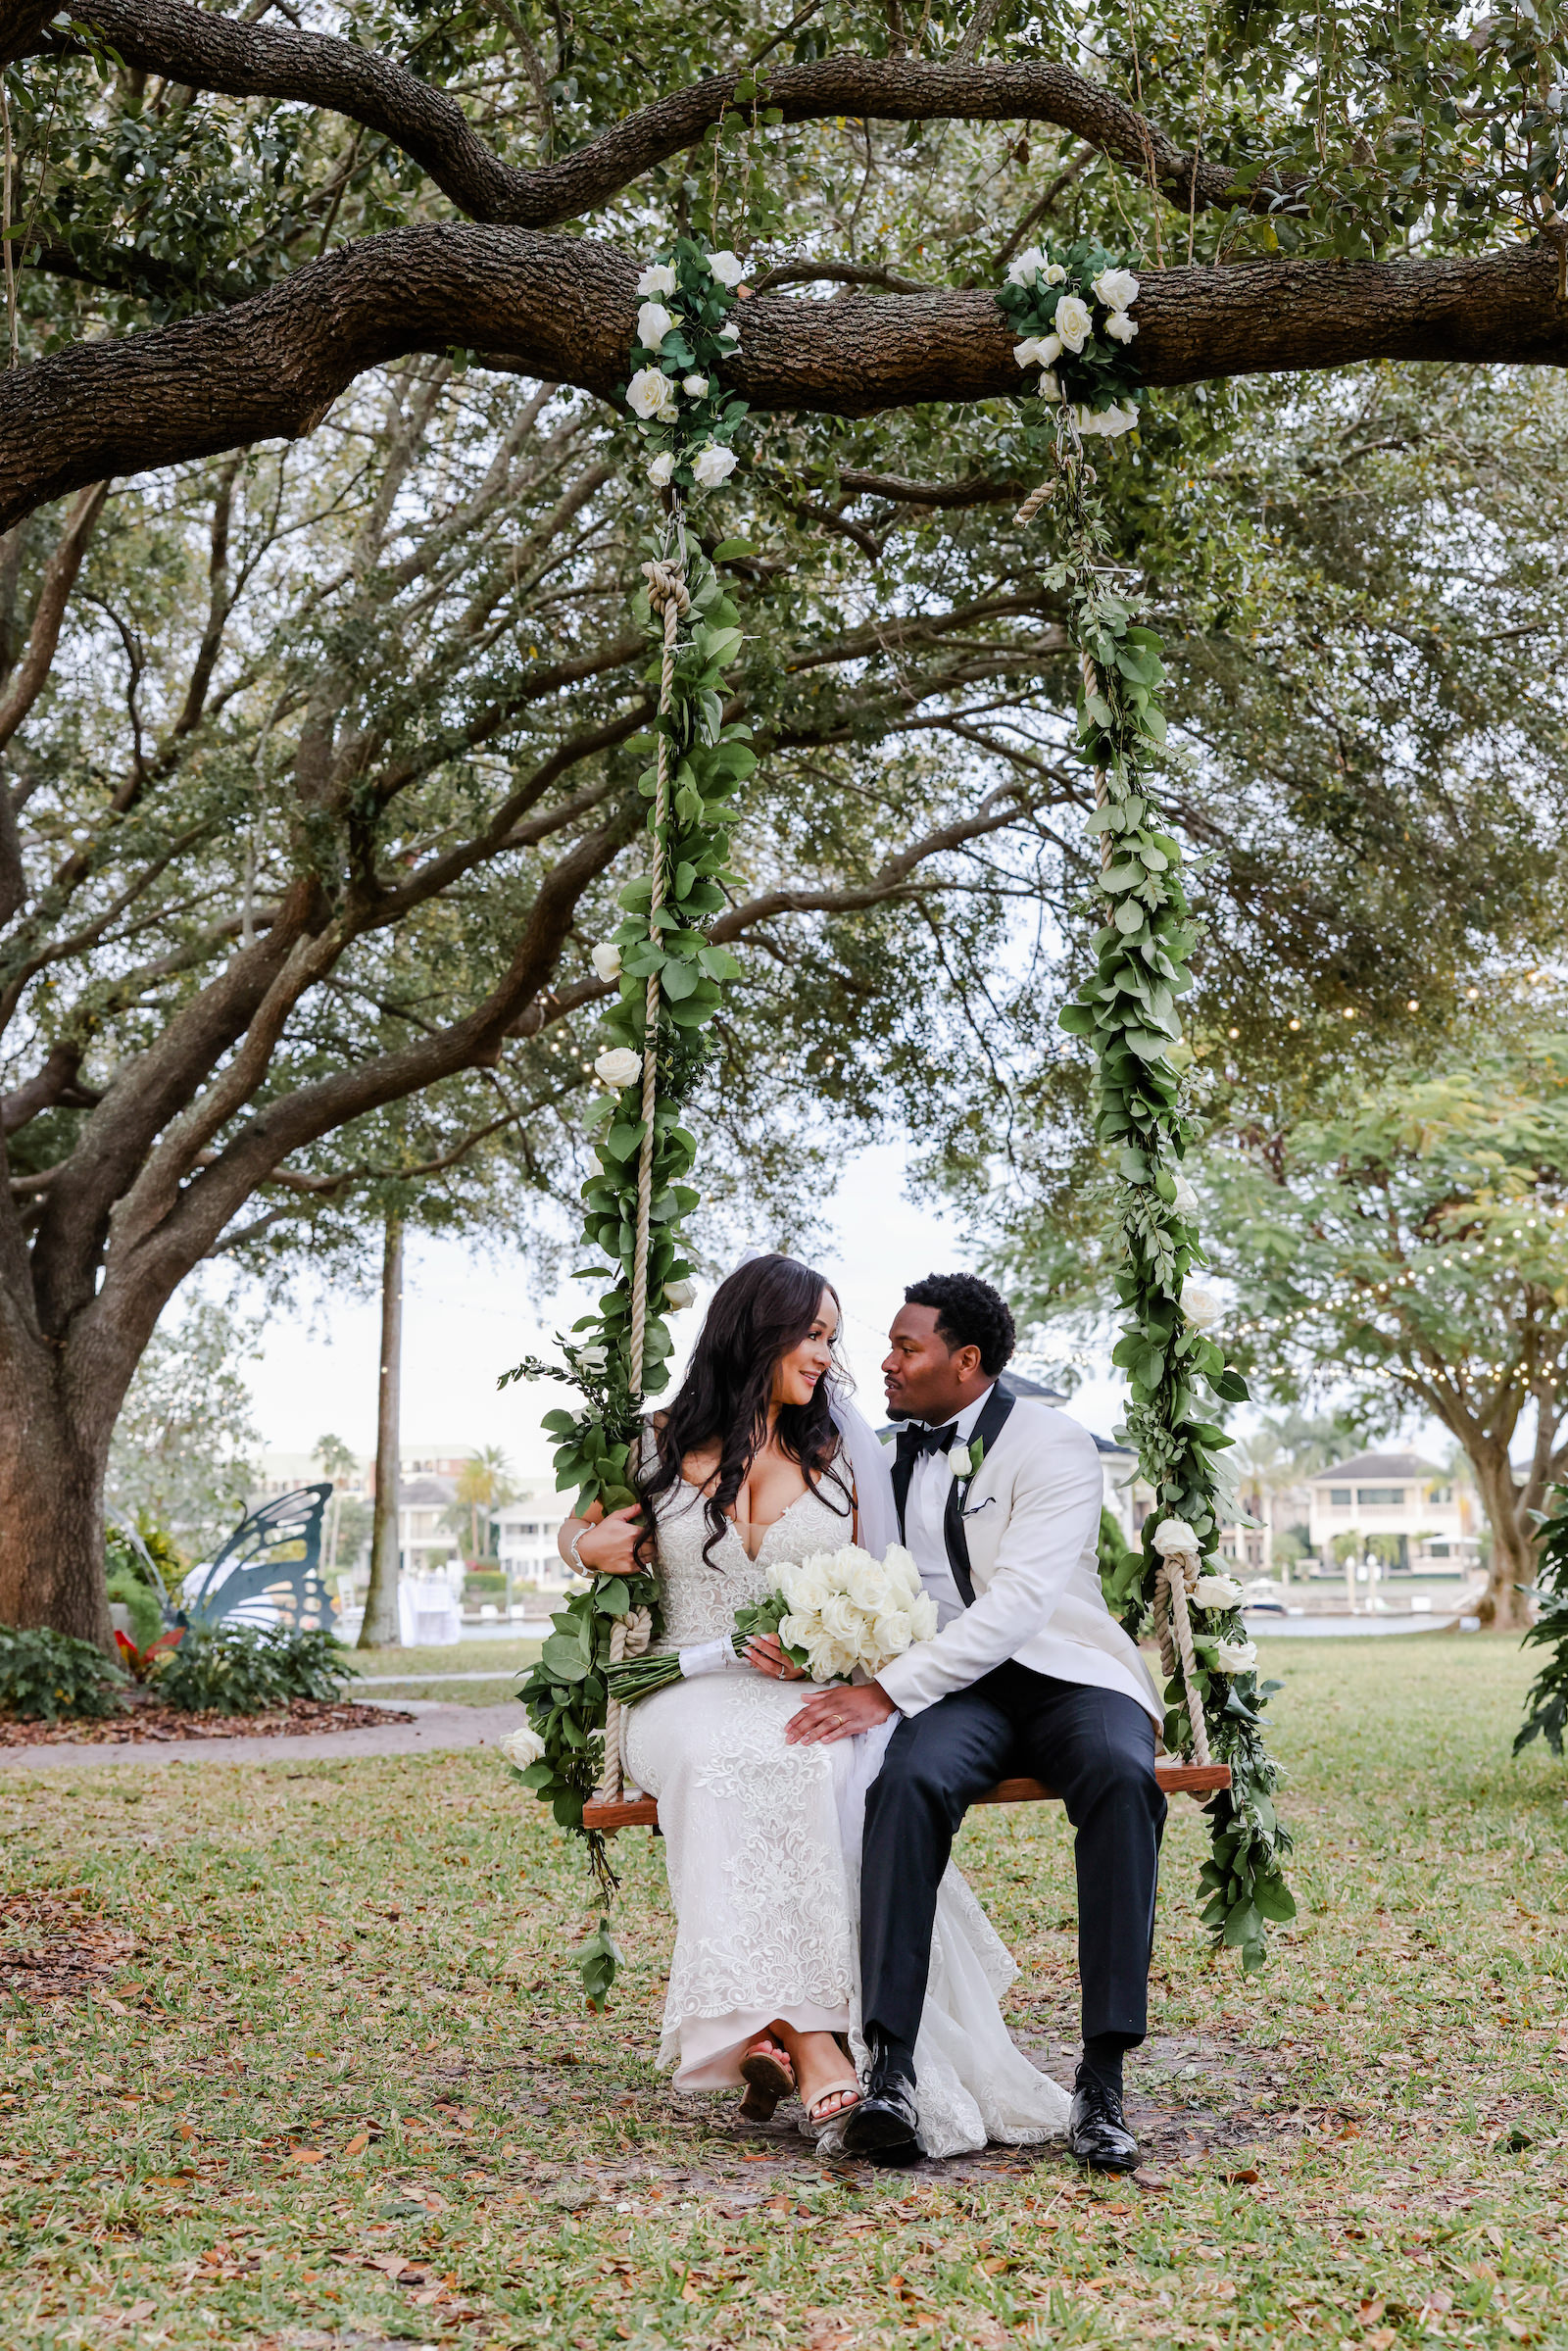 Modern Romantic Glam Bride and Groom Sitting on Swing Hanging on Tree | Tampa Bay Wedding Photographer Lifelong Photography Studio